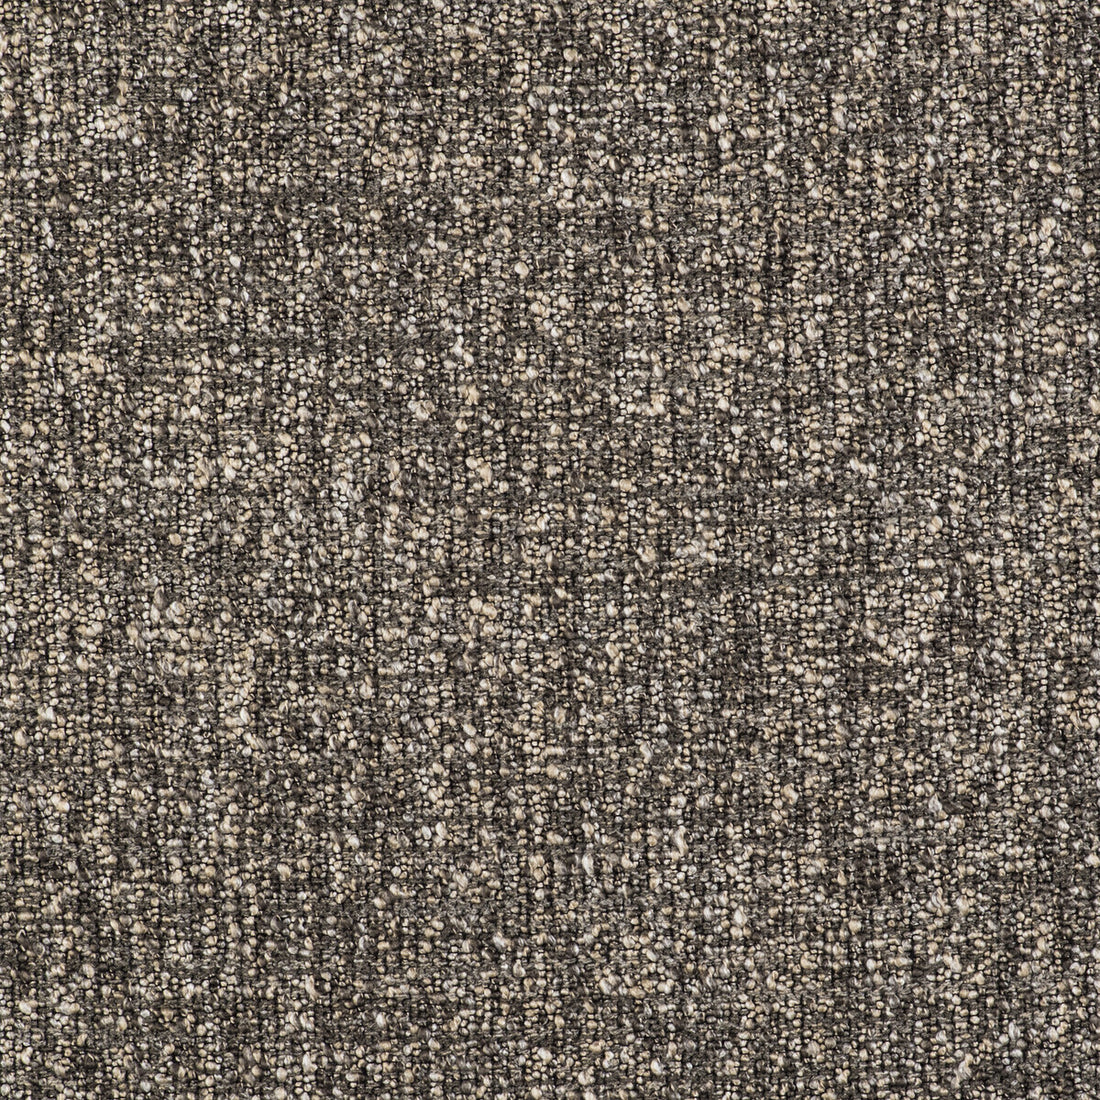 Telar fabric in plomo color - pattern GDT5499.008.0 - by Gaston y Daniela in the Gaston Libreria collection